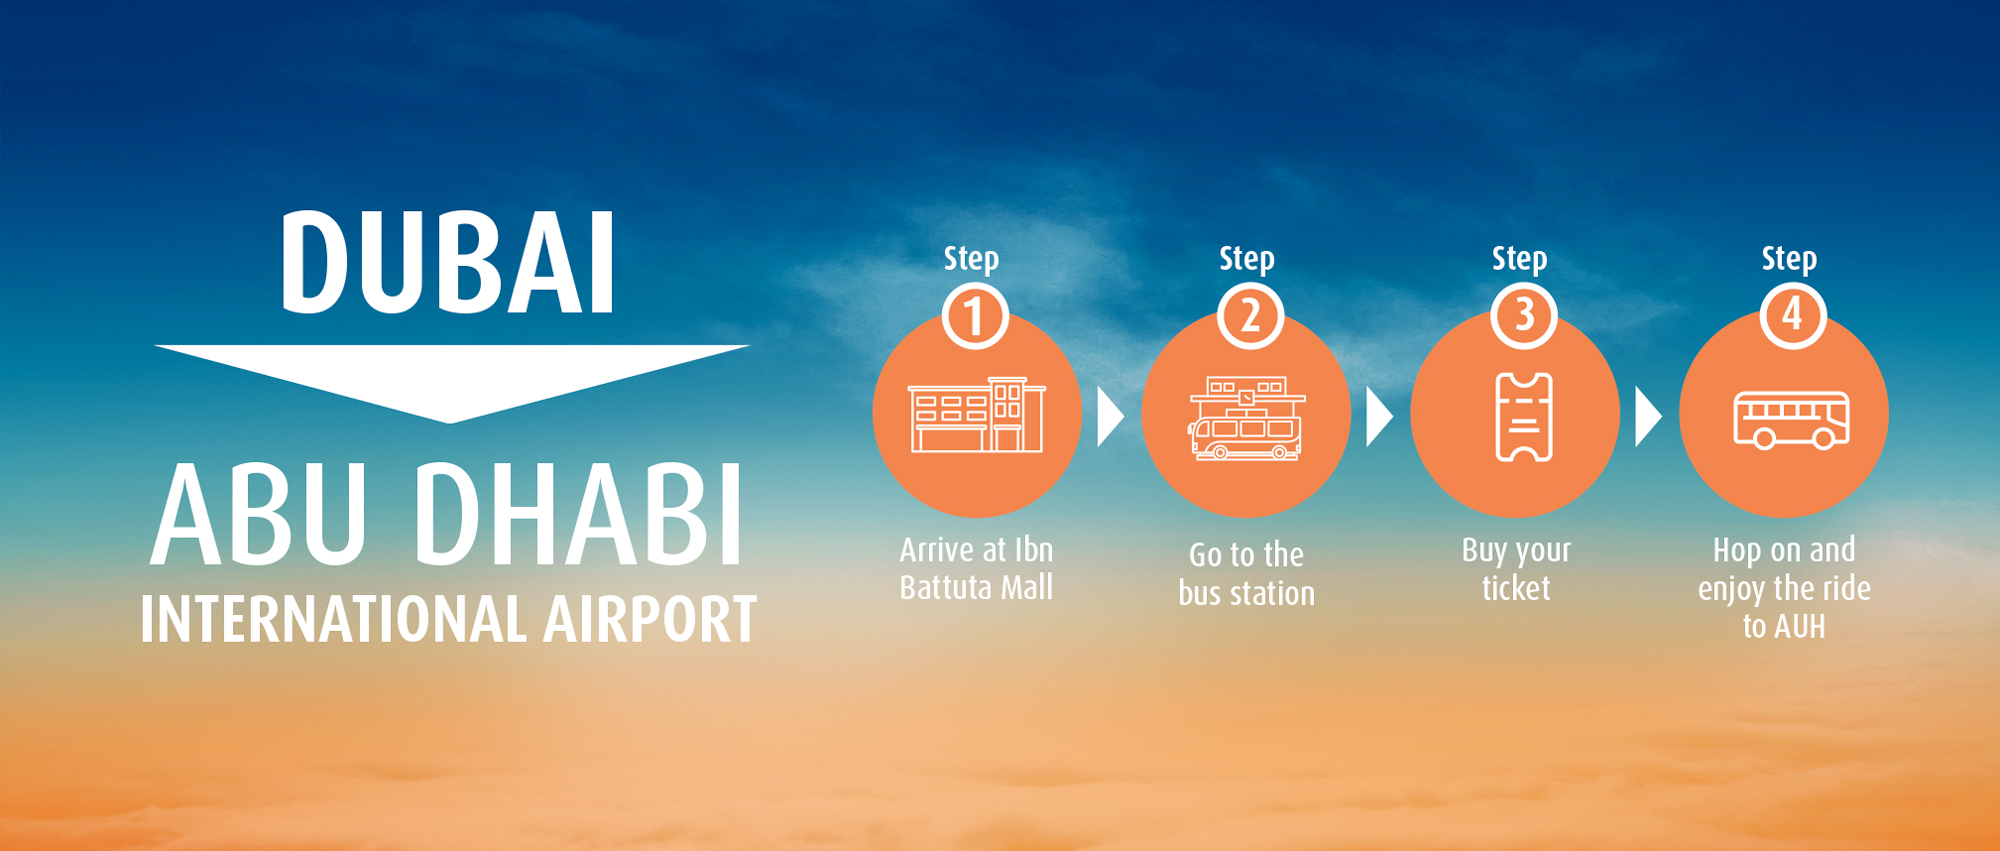 travel from dubai to abu dhabi airport